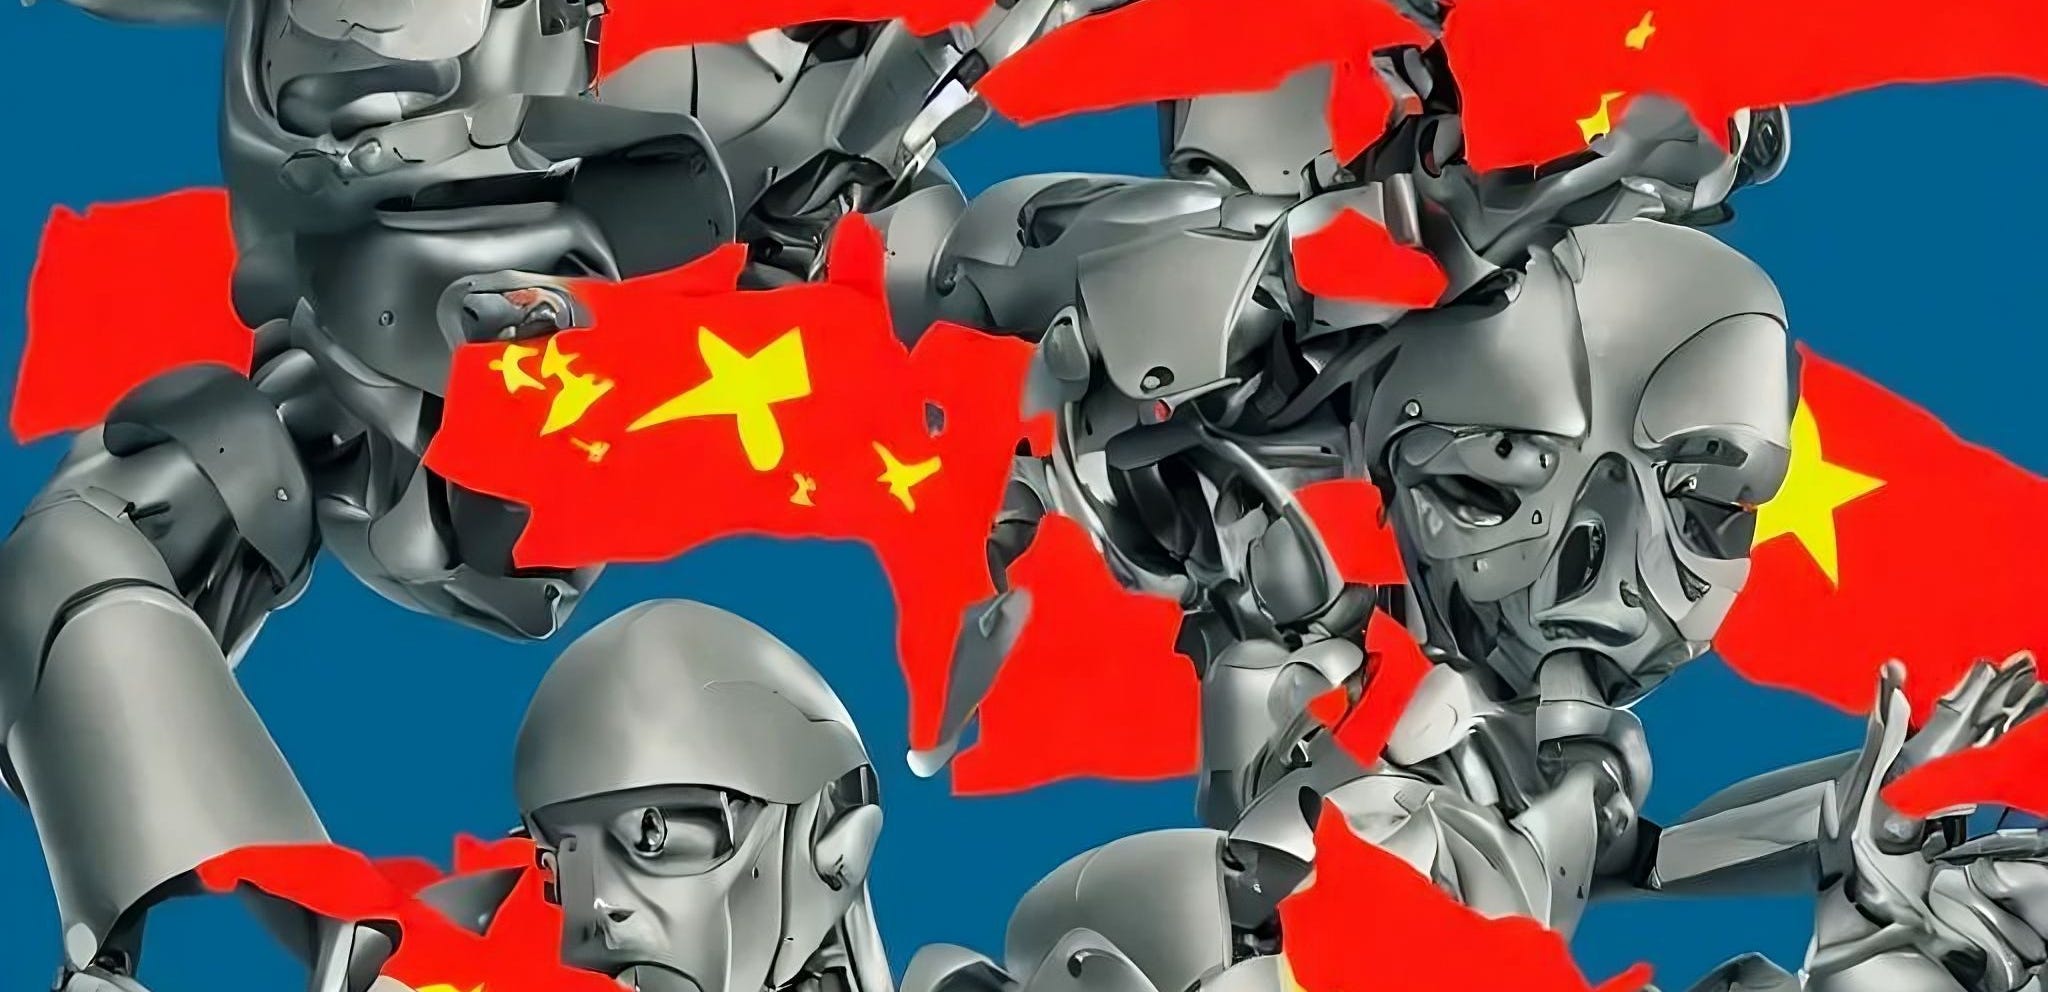 Free AI art images of strategic dominance